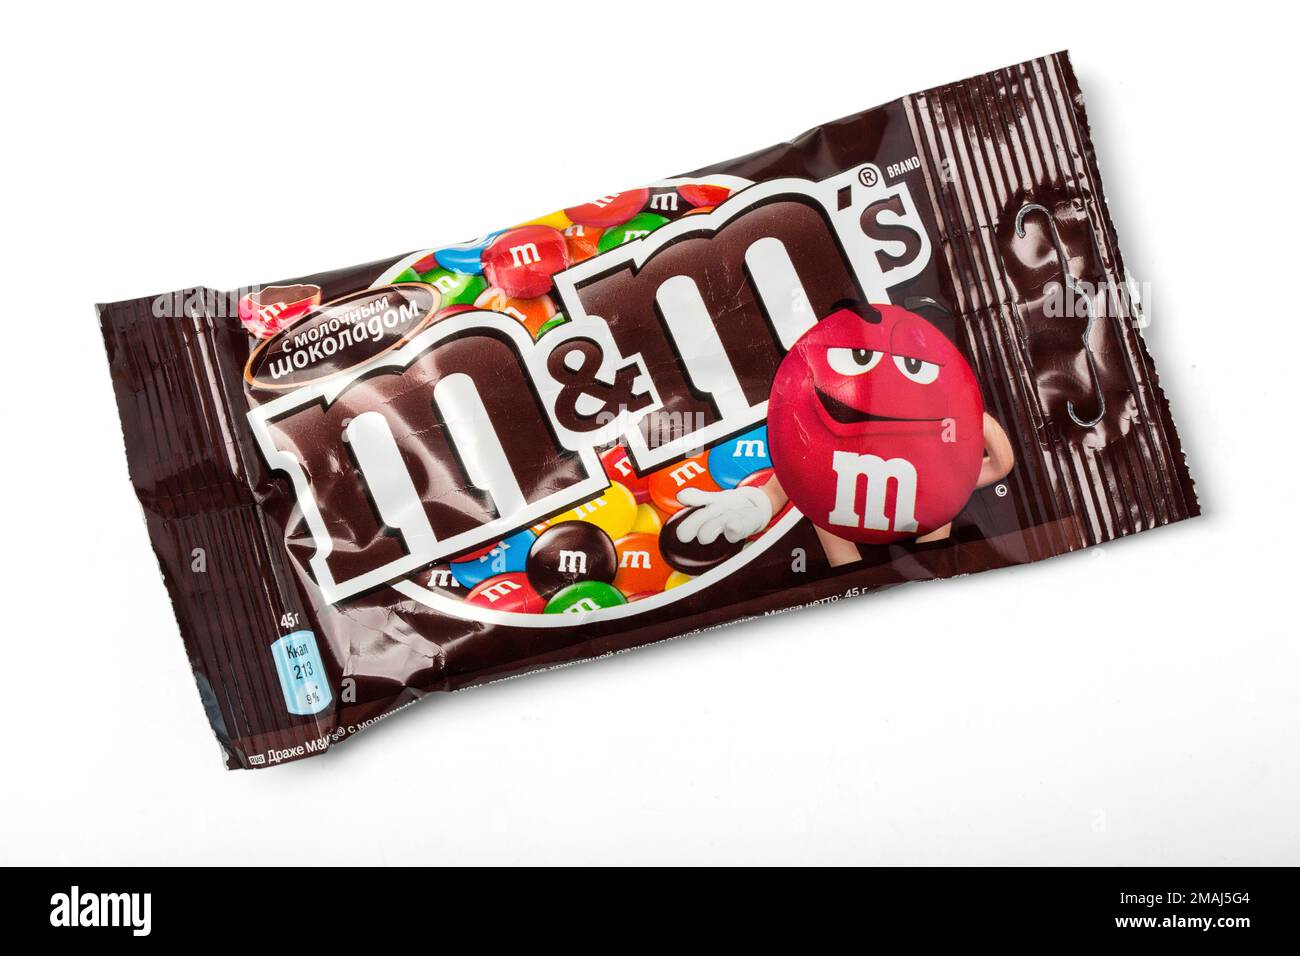 Packet of Milk Chocolate M&Ms, USA Stock Photo - Alamy